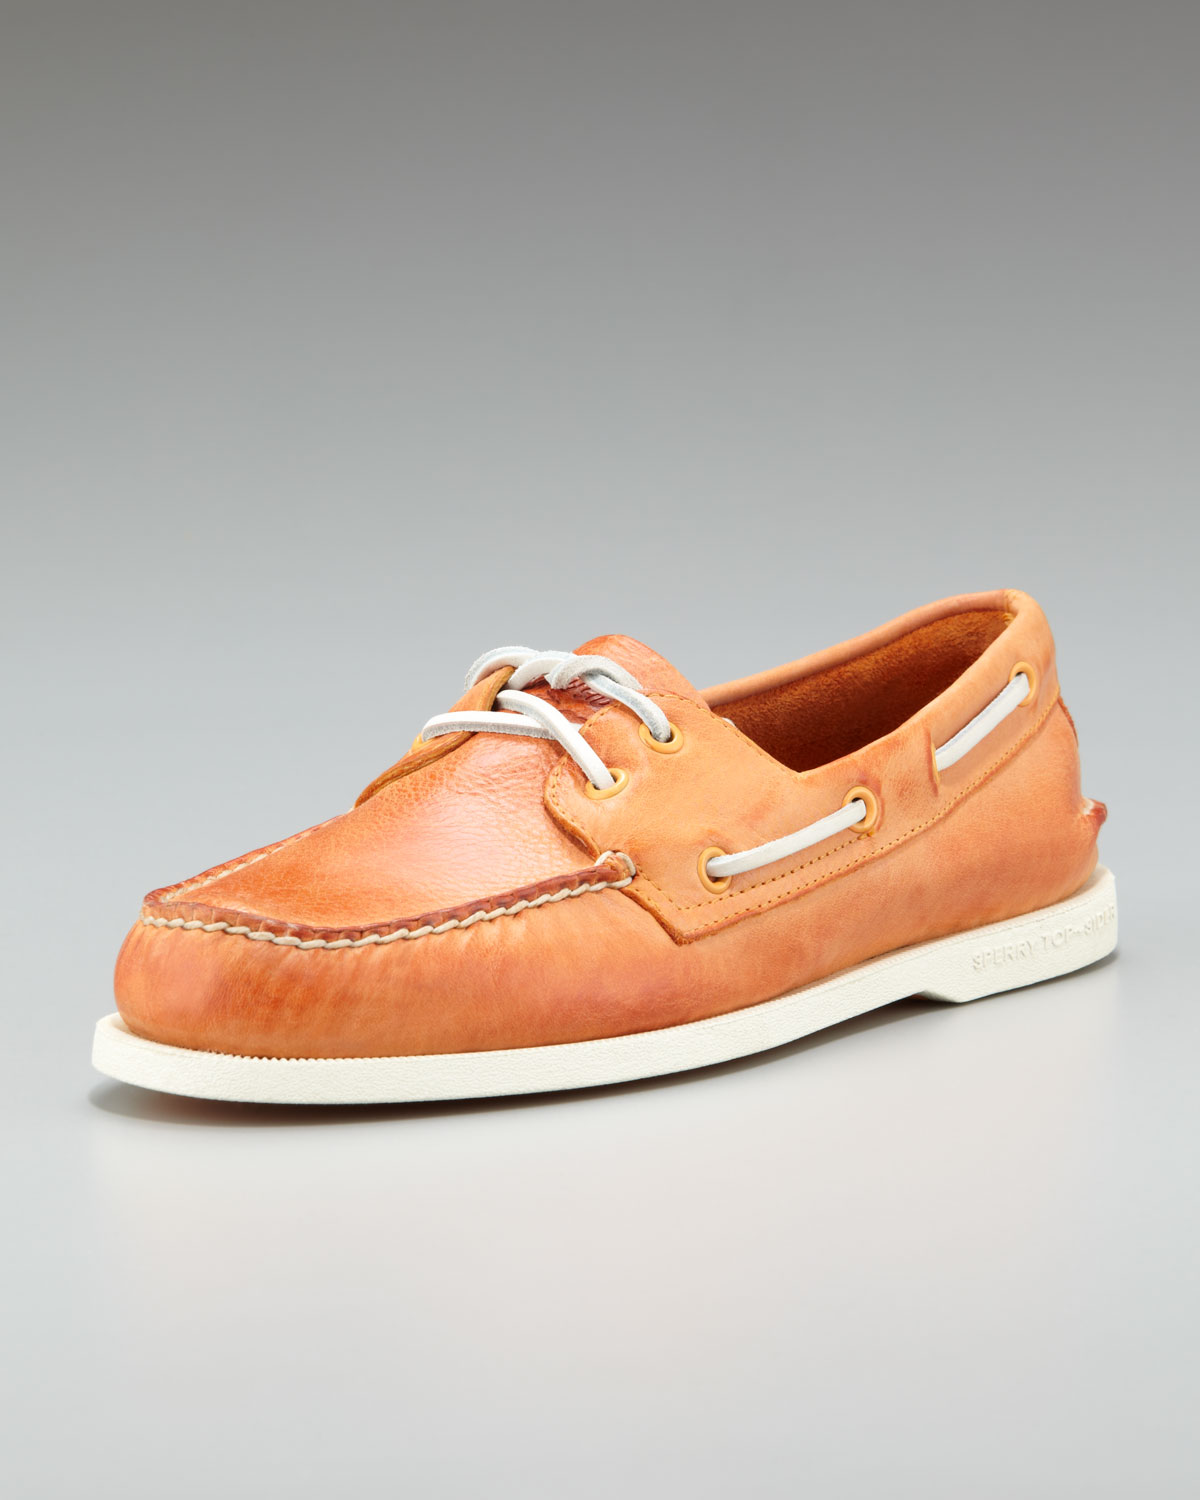 sperry orange shoes